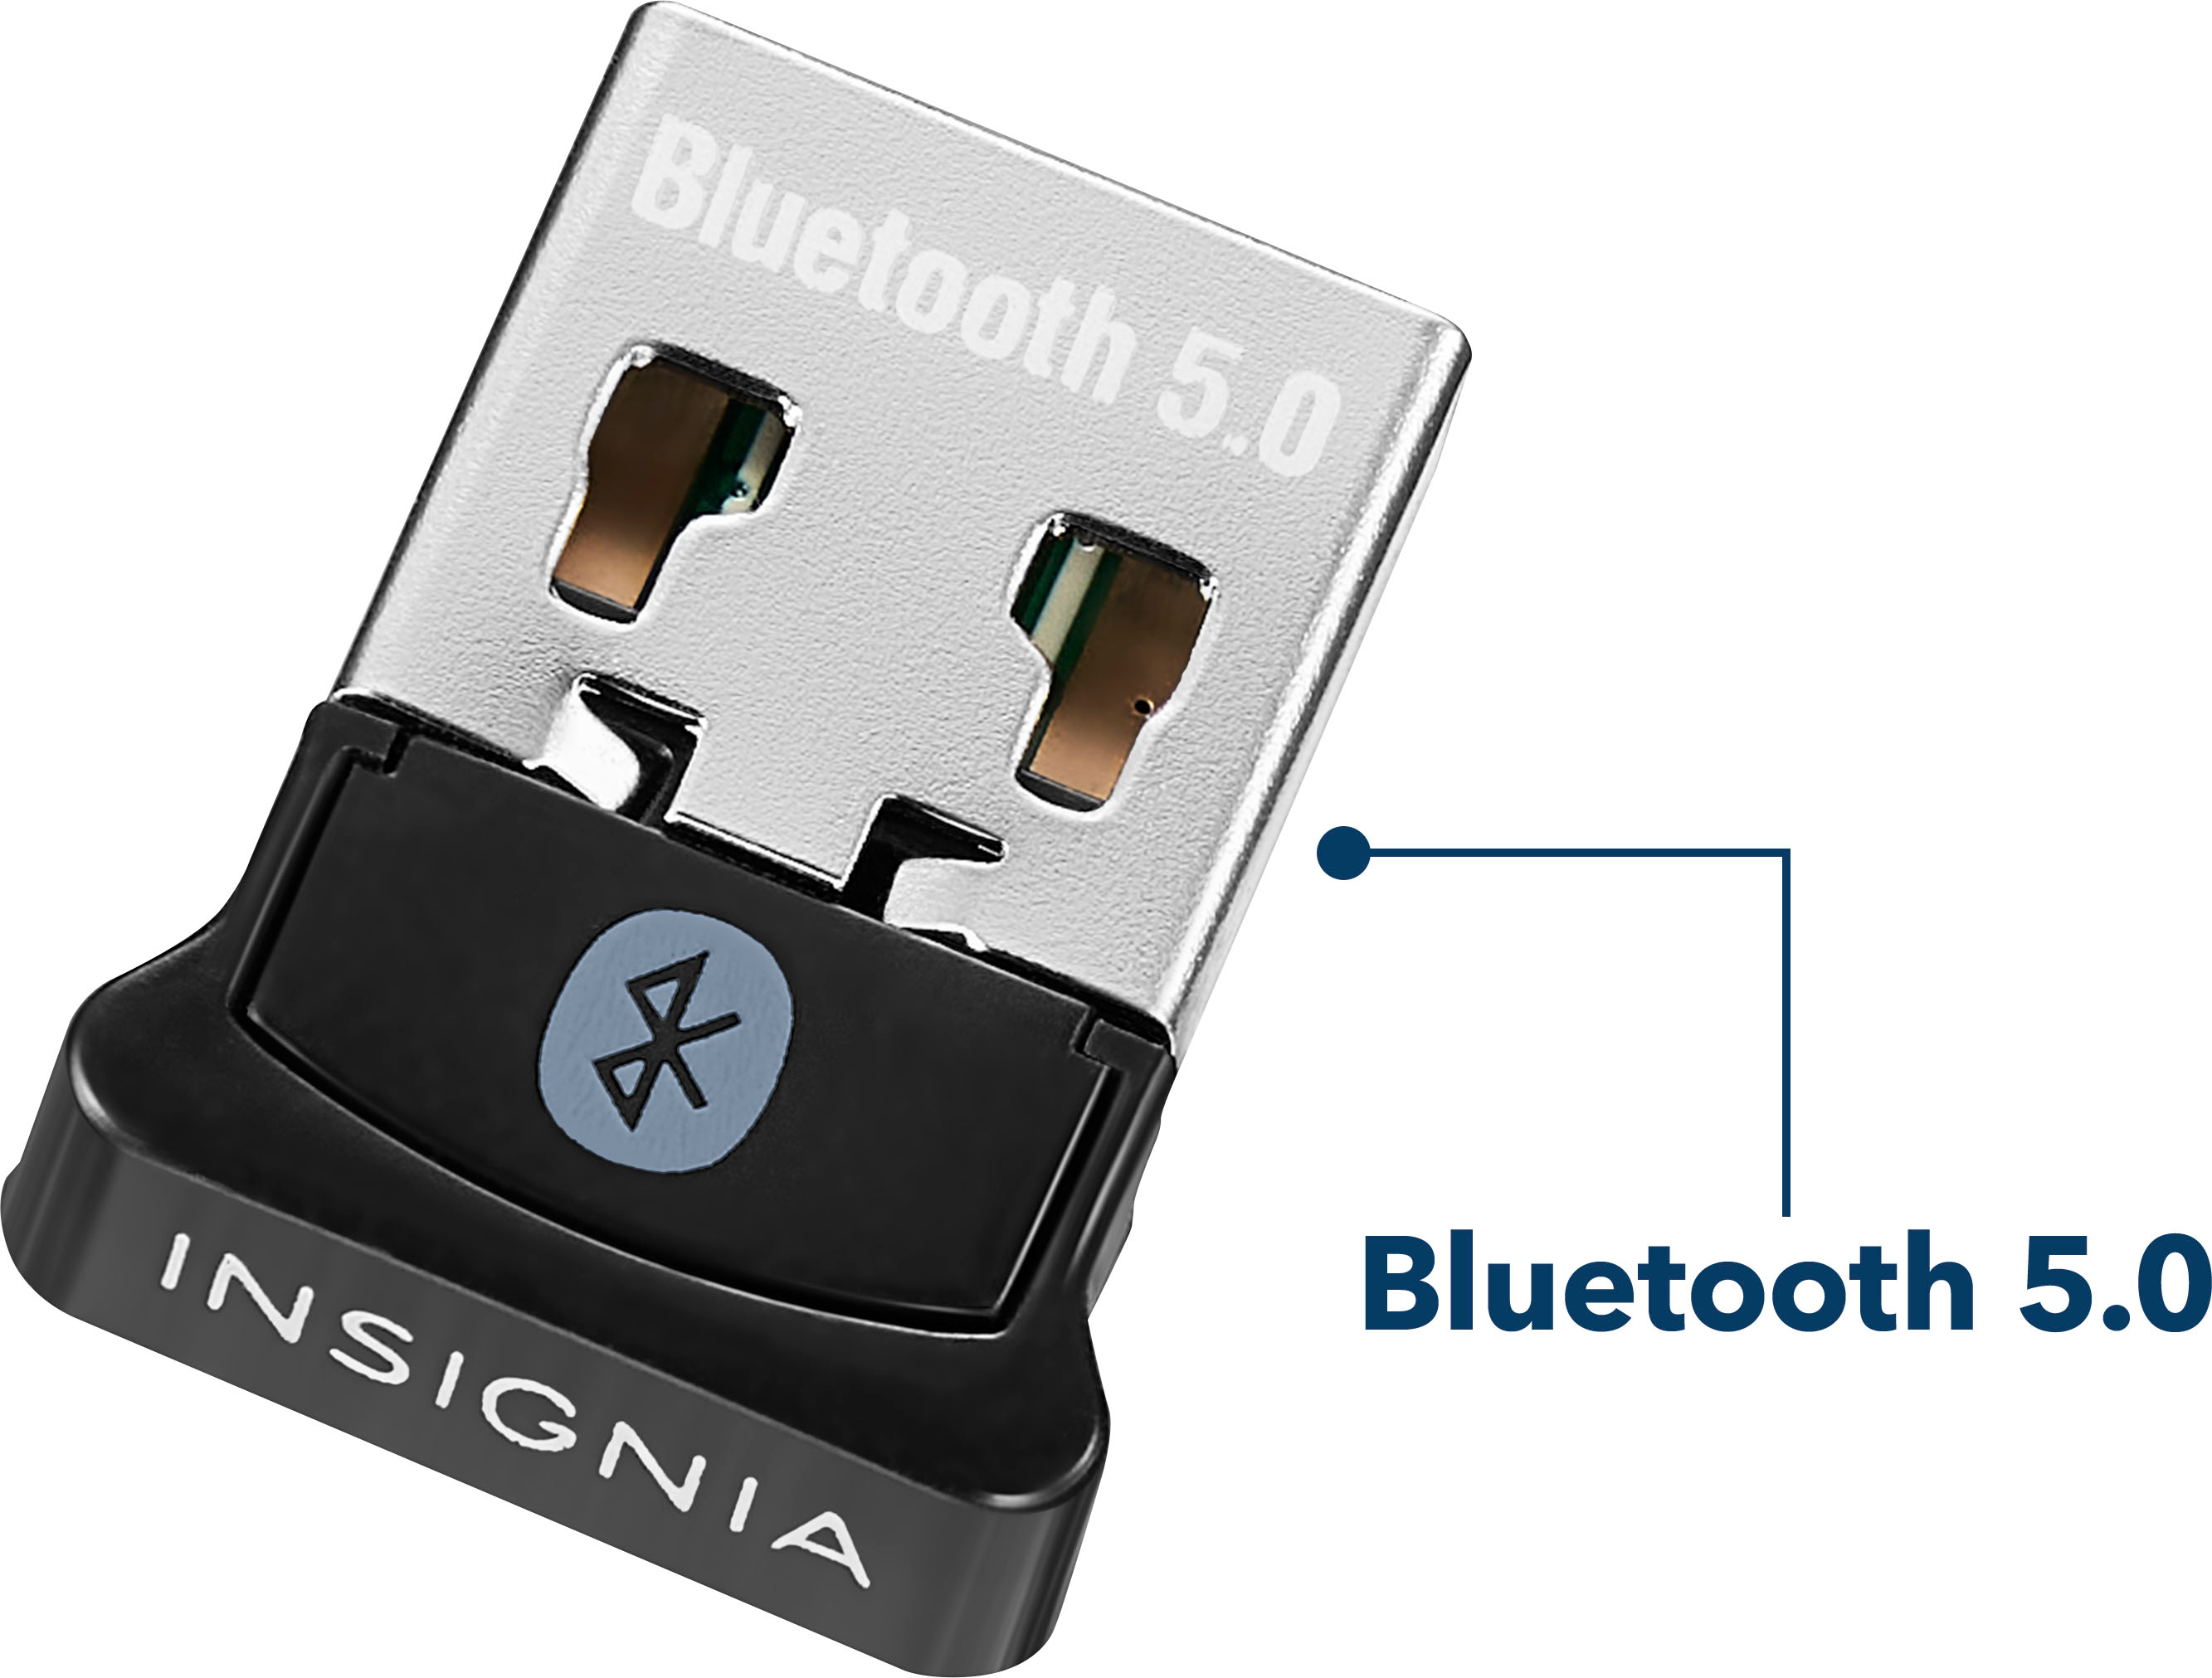 Premier Bluetooth USB Adapter